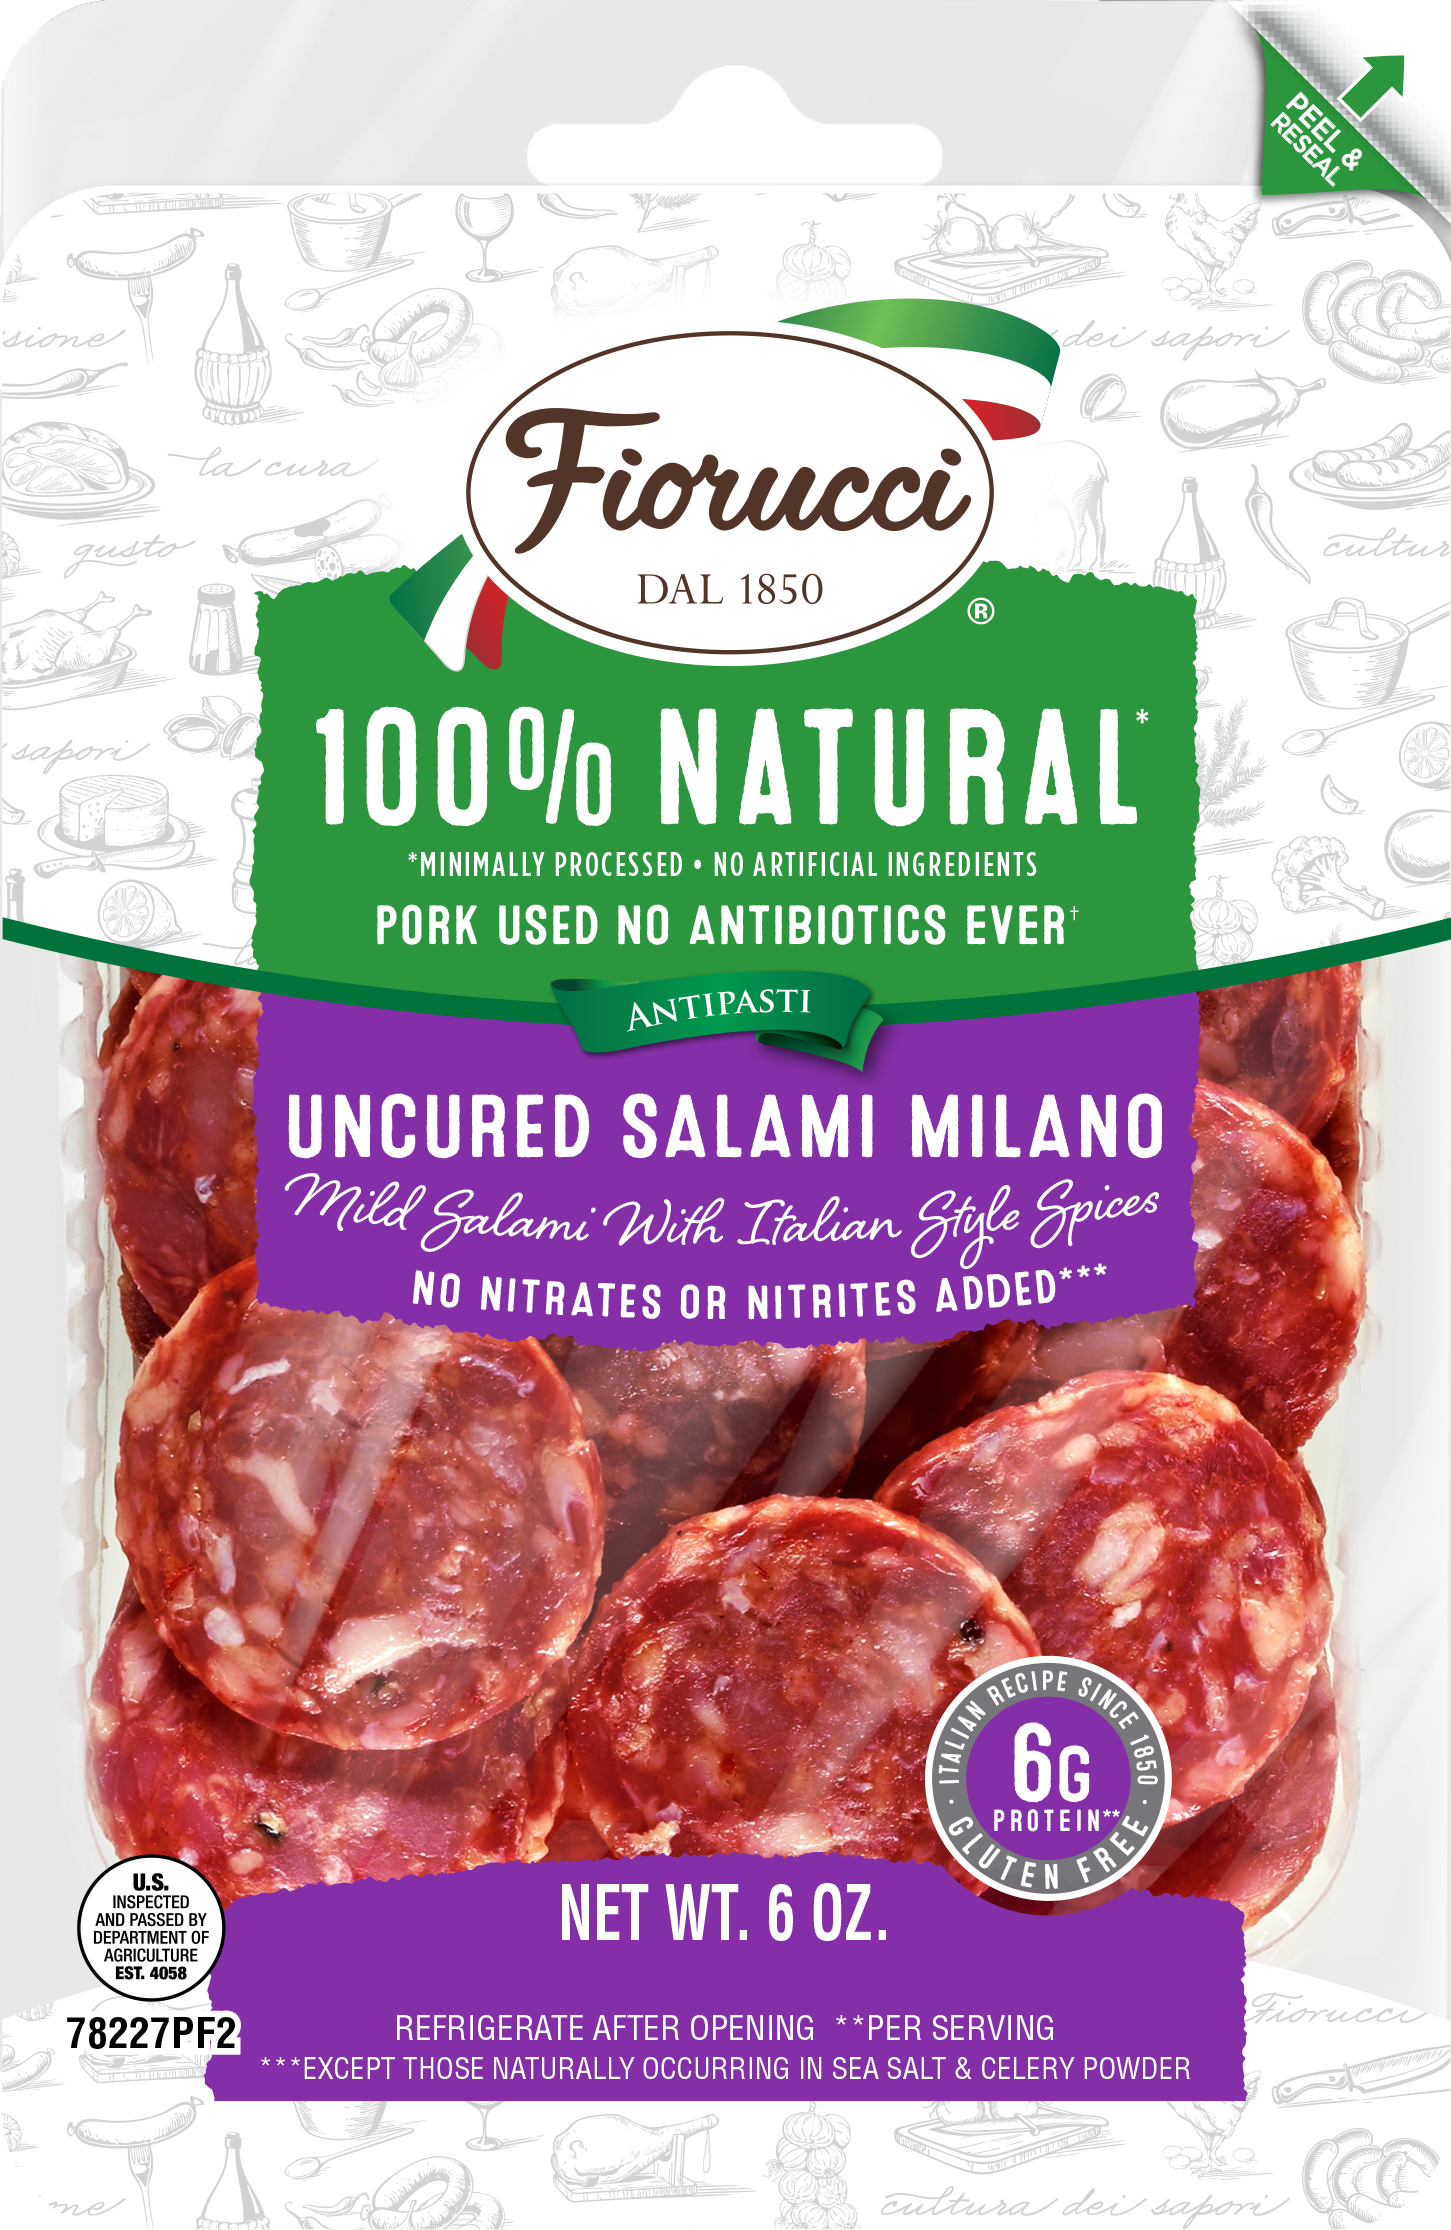 Uncured Salami Milano Charcuterie Slices